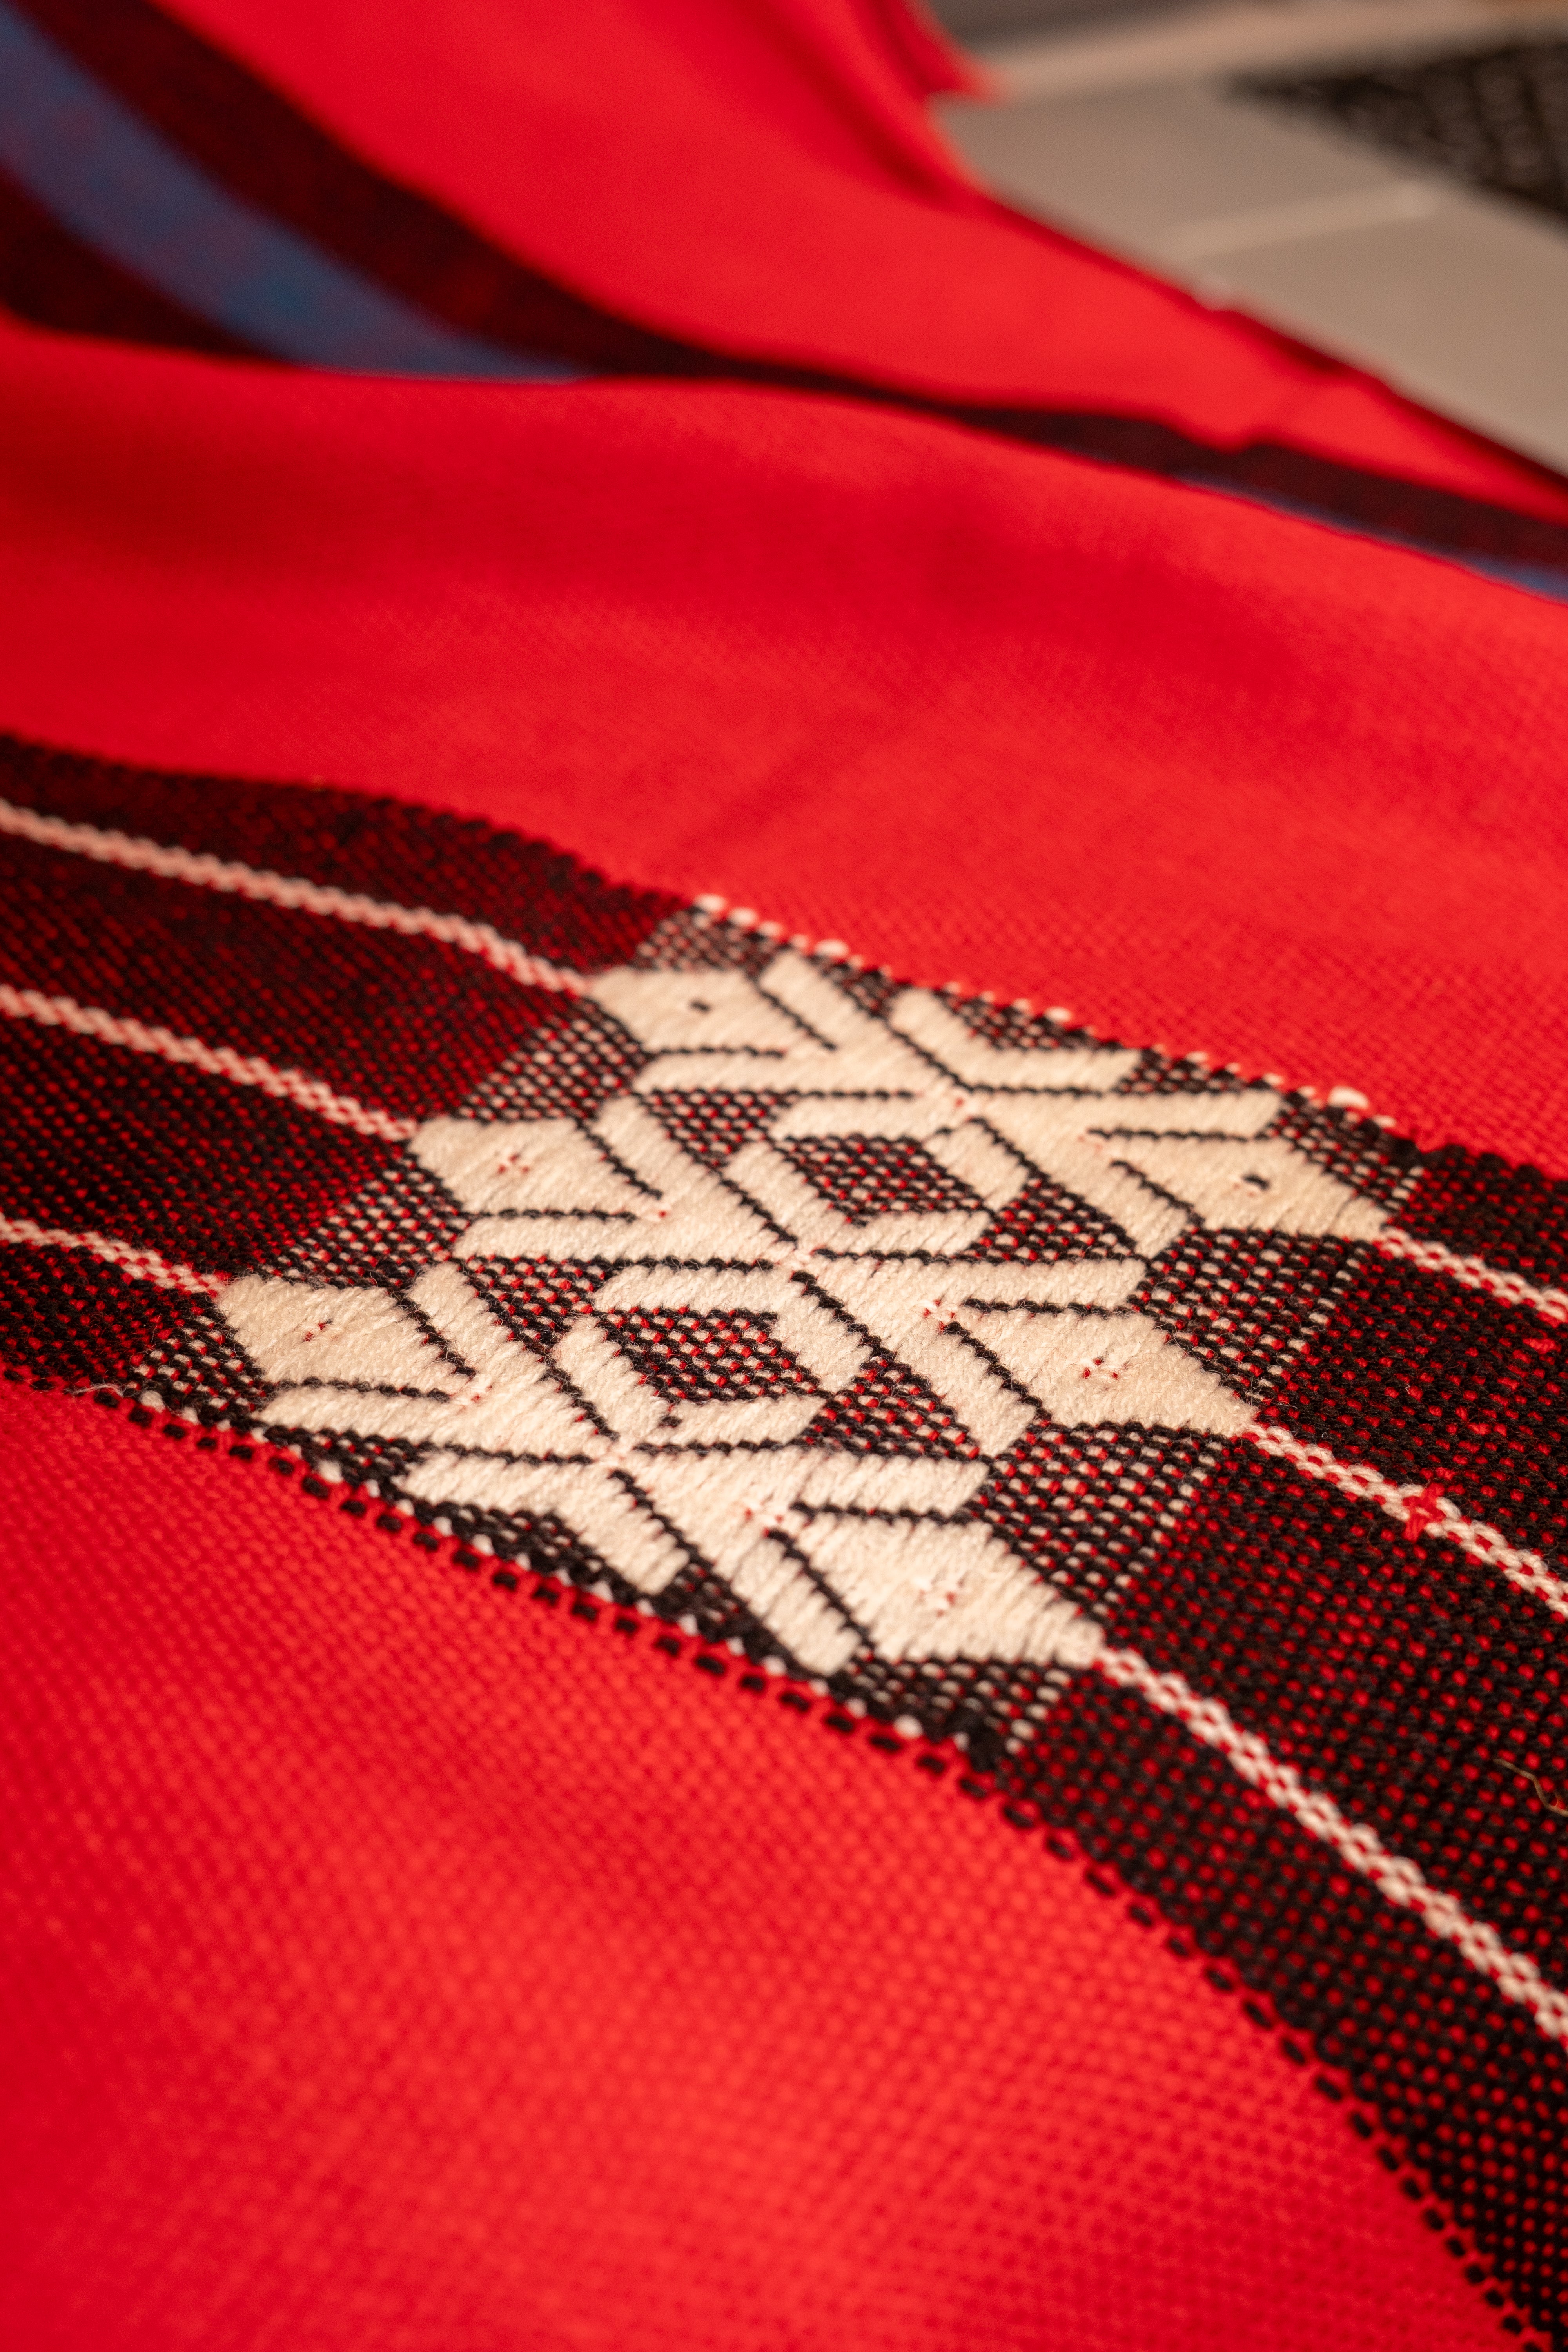 OMVAI Artisanal Patterned Cashmilon Woven Throw Blanket / Comforter - Crimson Red with black white weave